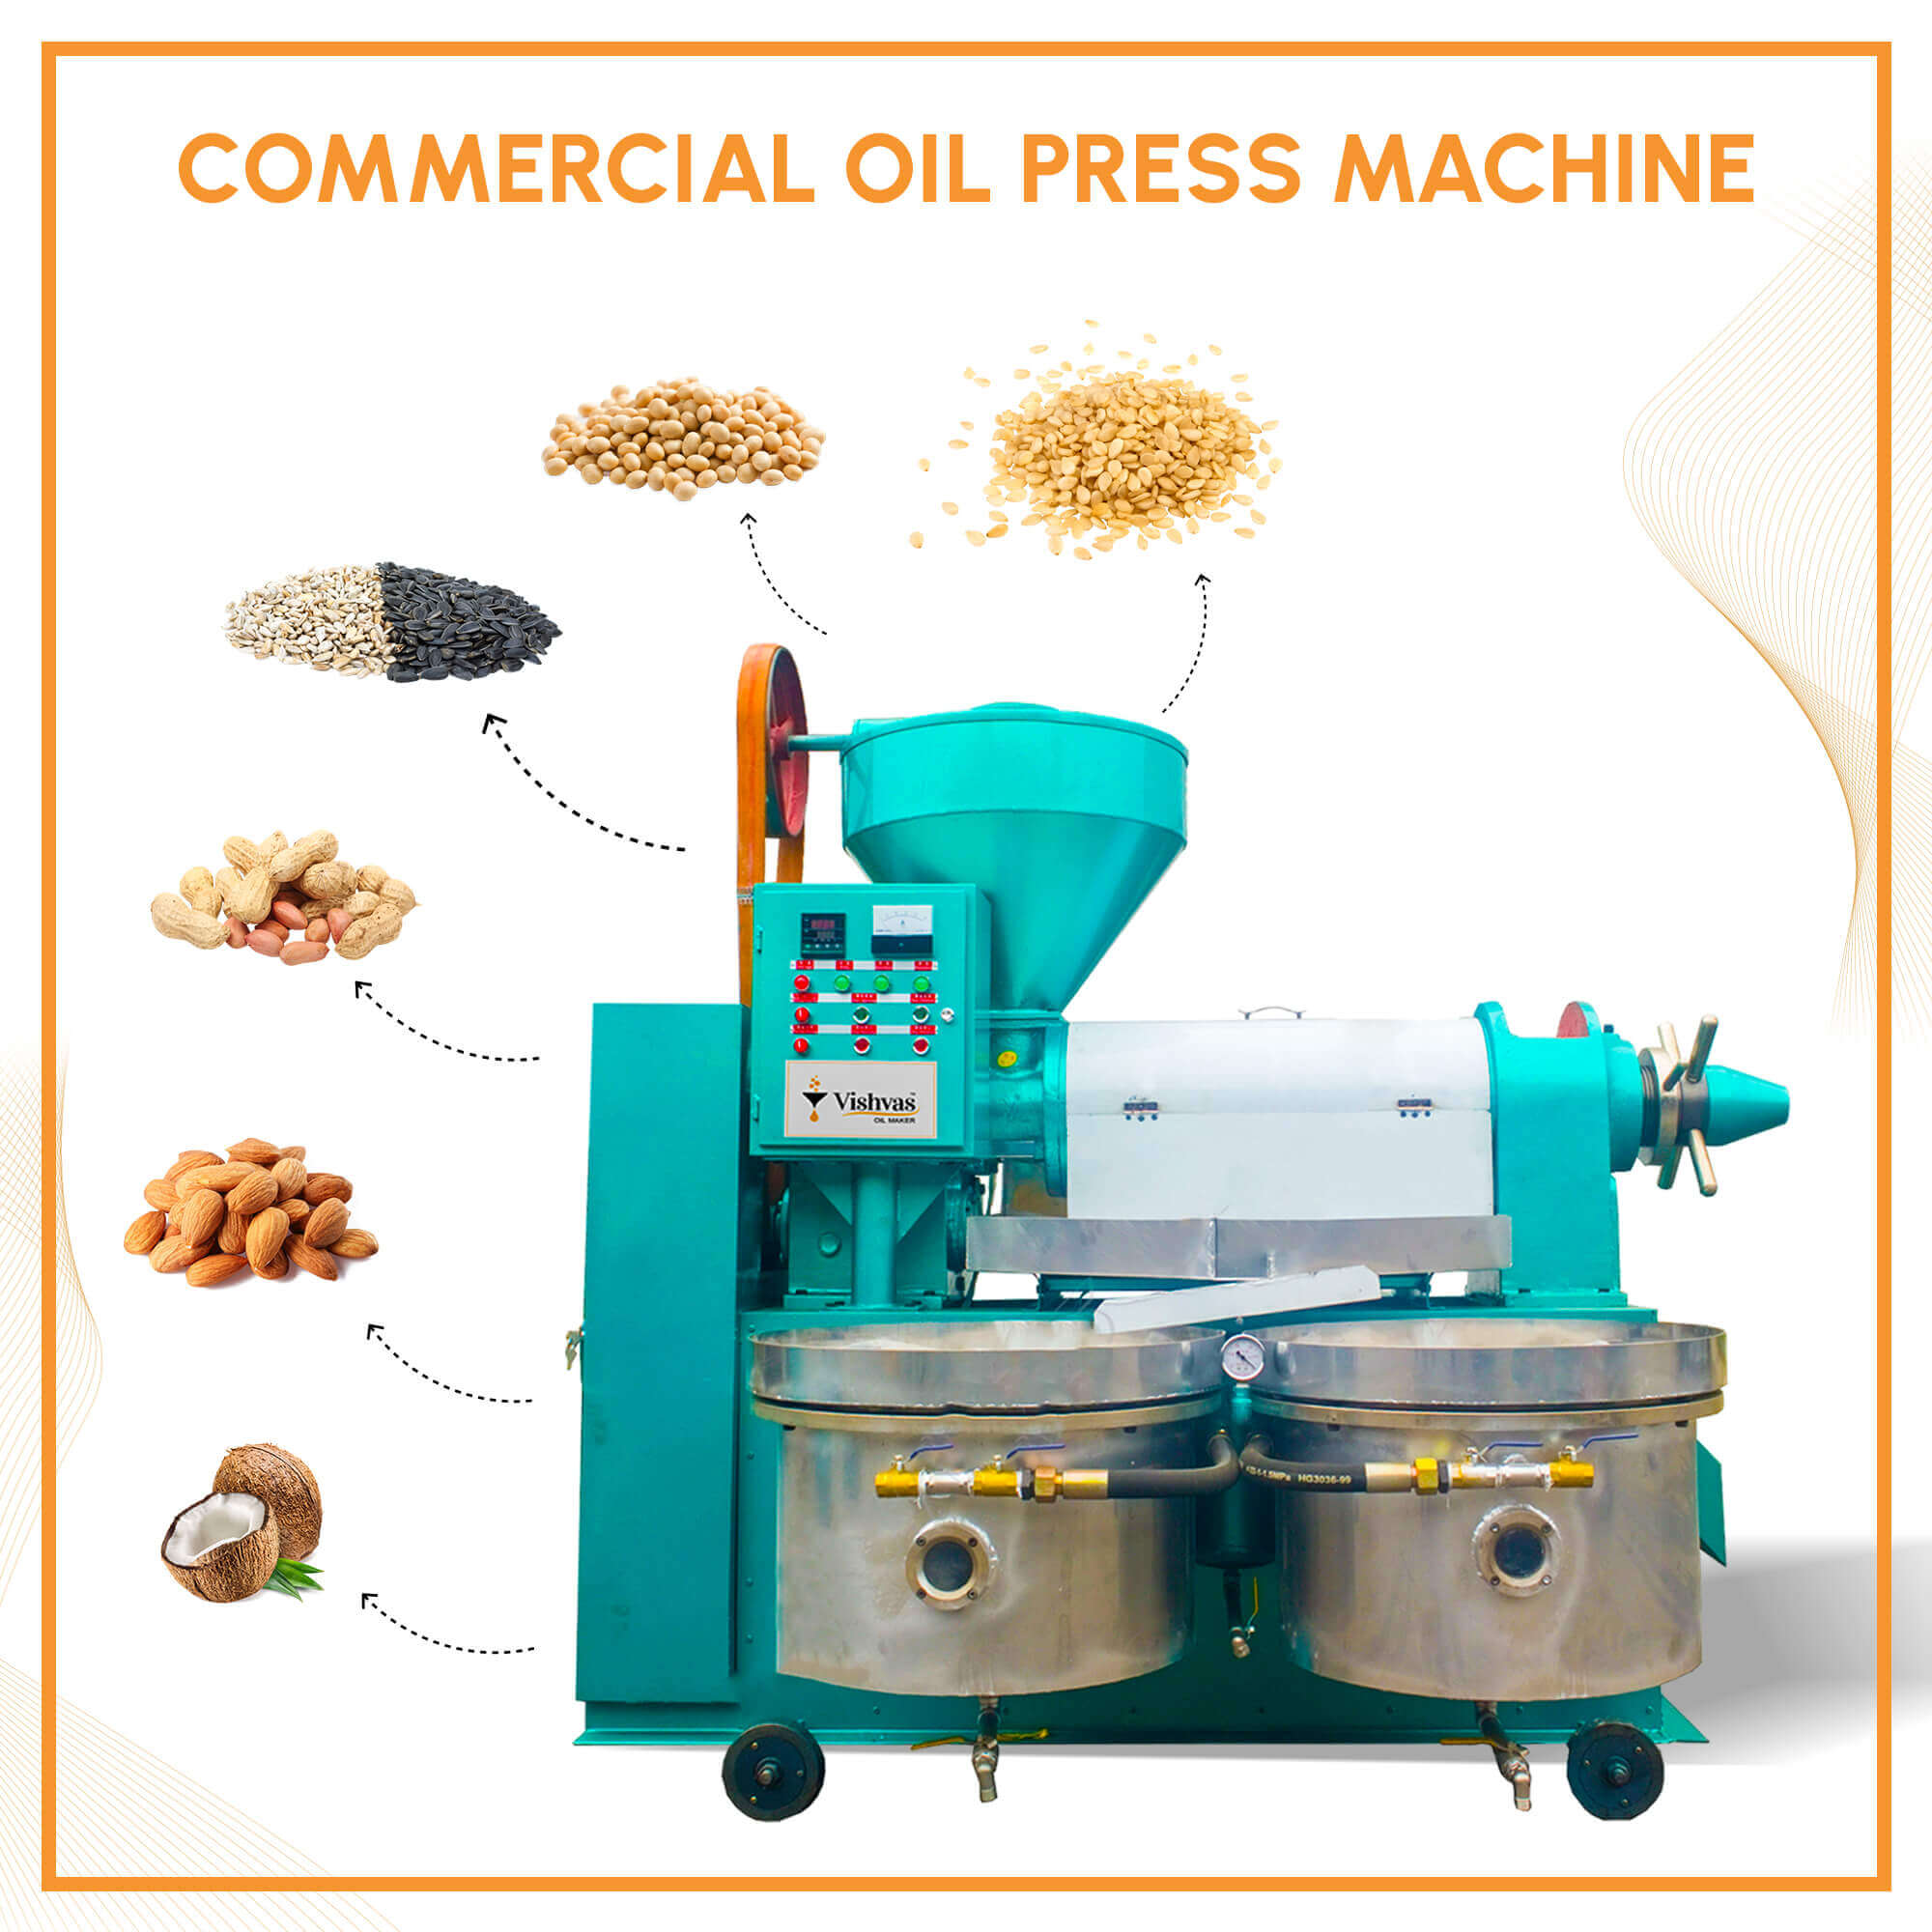 Commercial Oil Press Machine